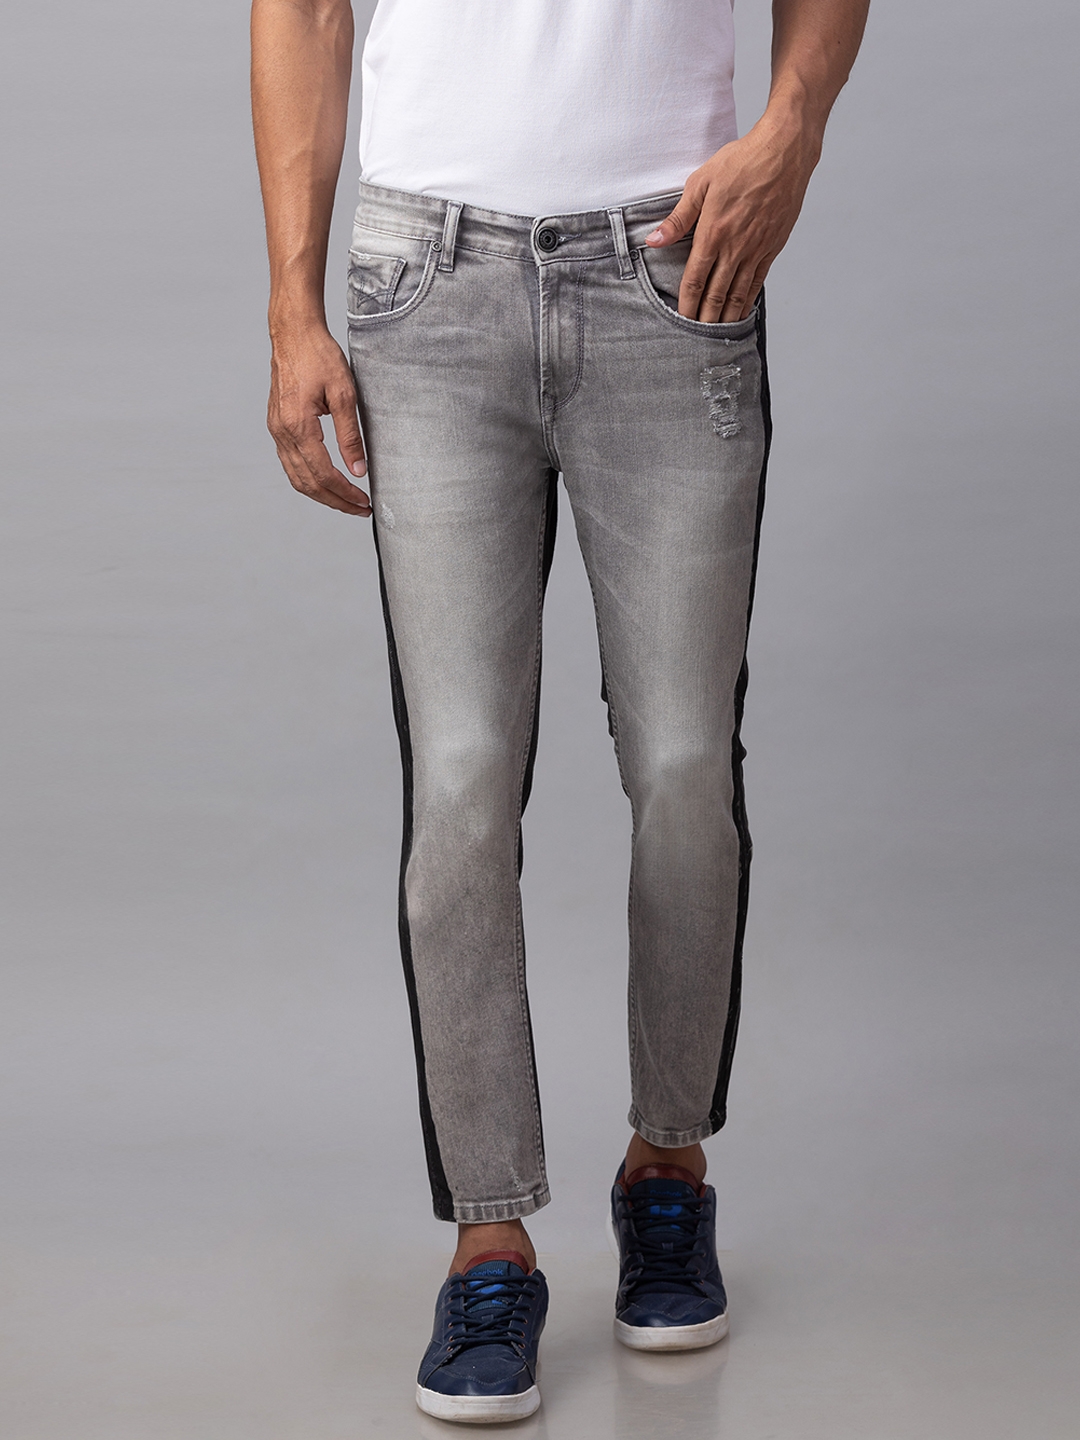 Men's Grey Cotton Solid Slim Jeans